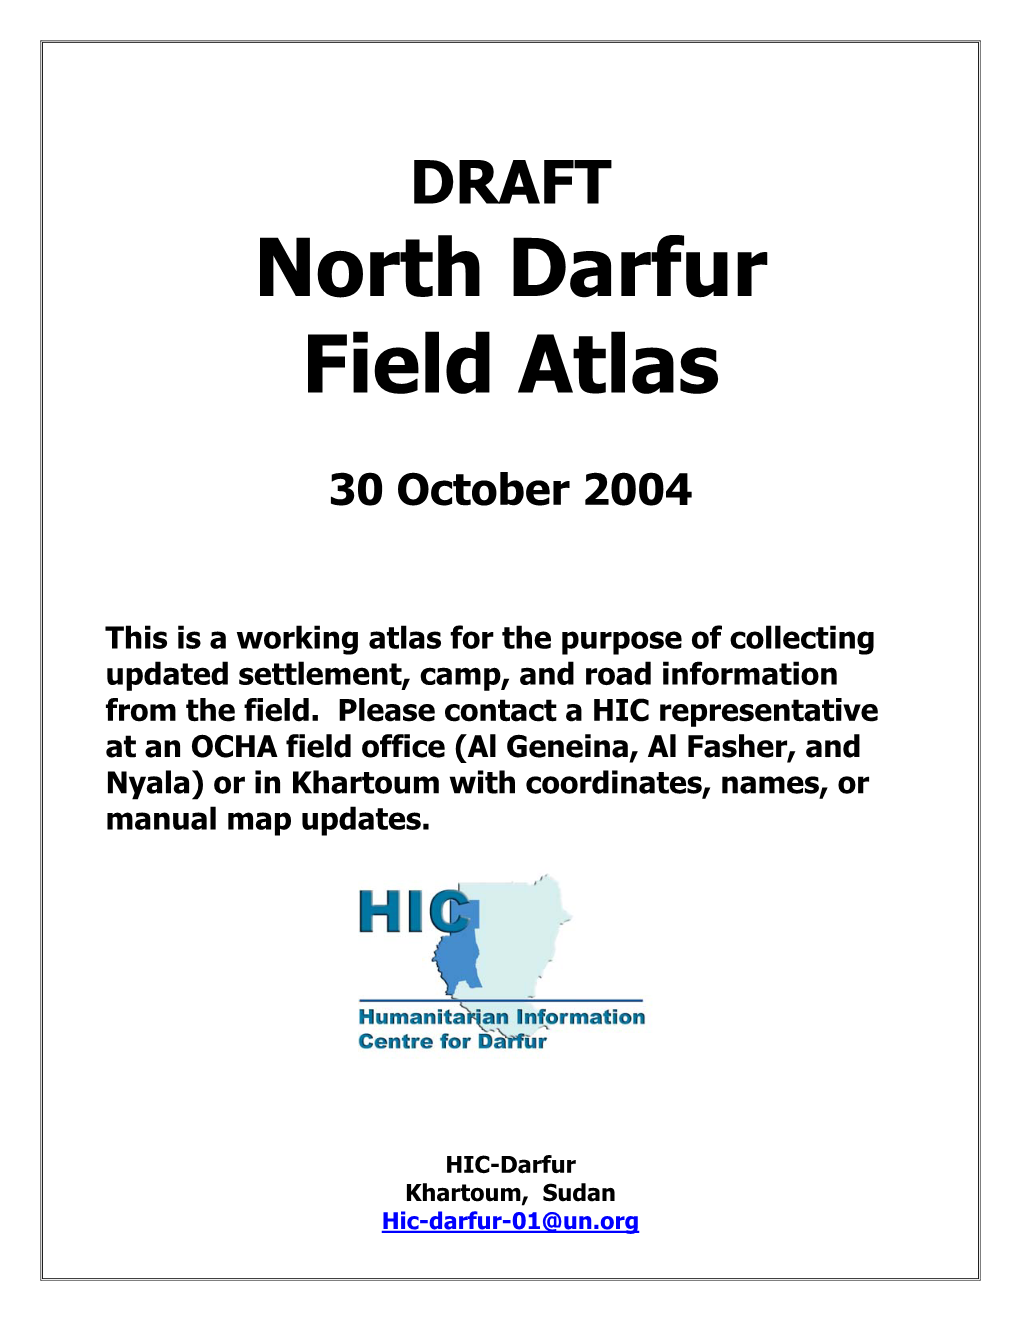 North Darfur Field Atlas